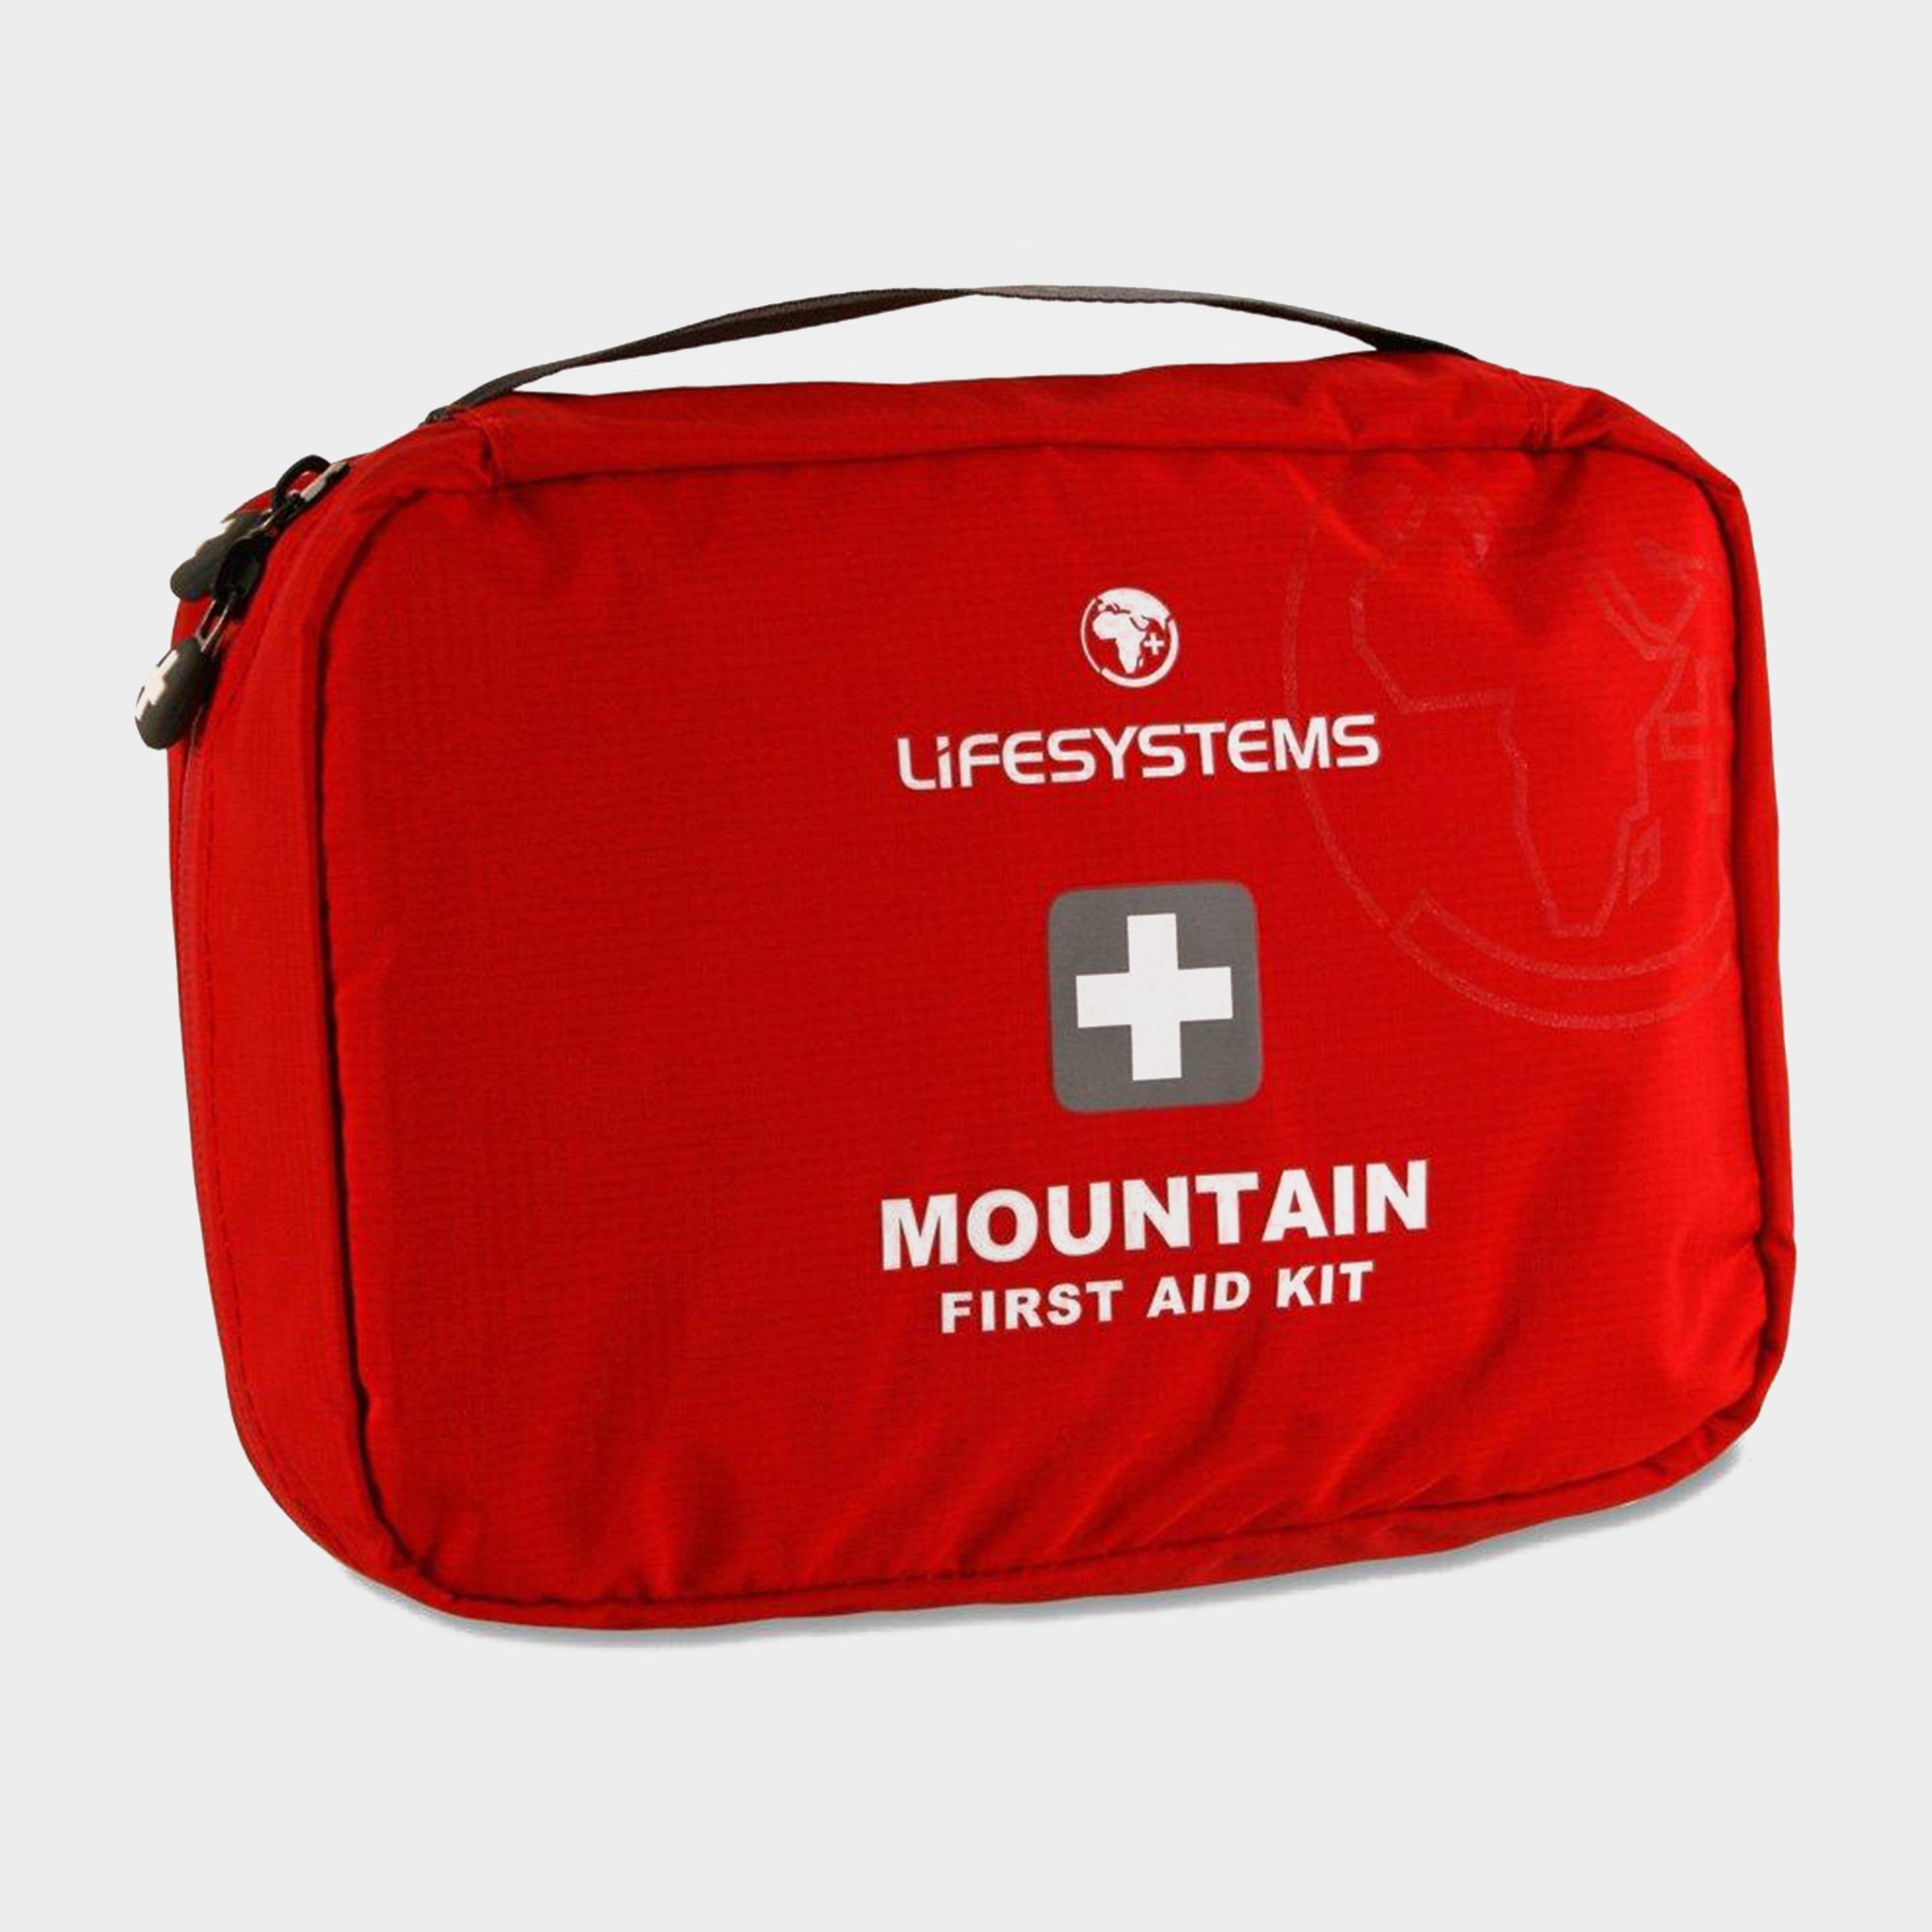  Lifesystems Mountain First Aid Kit